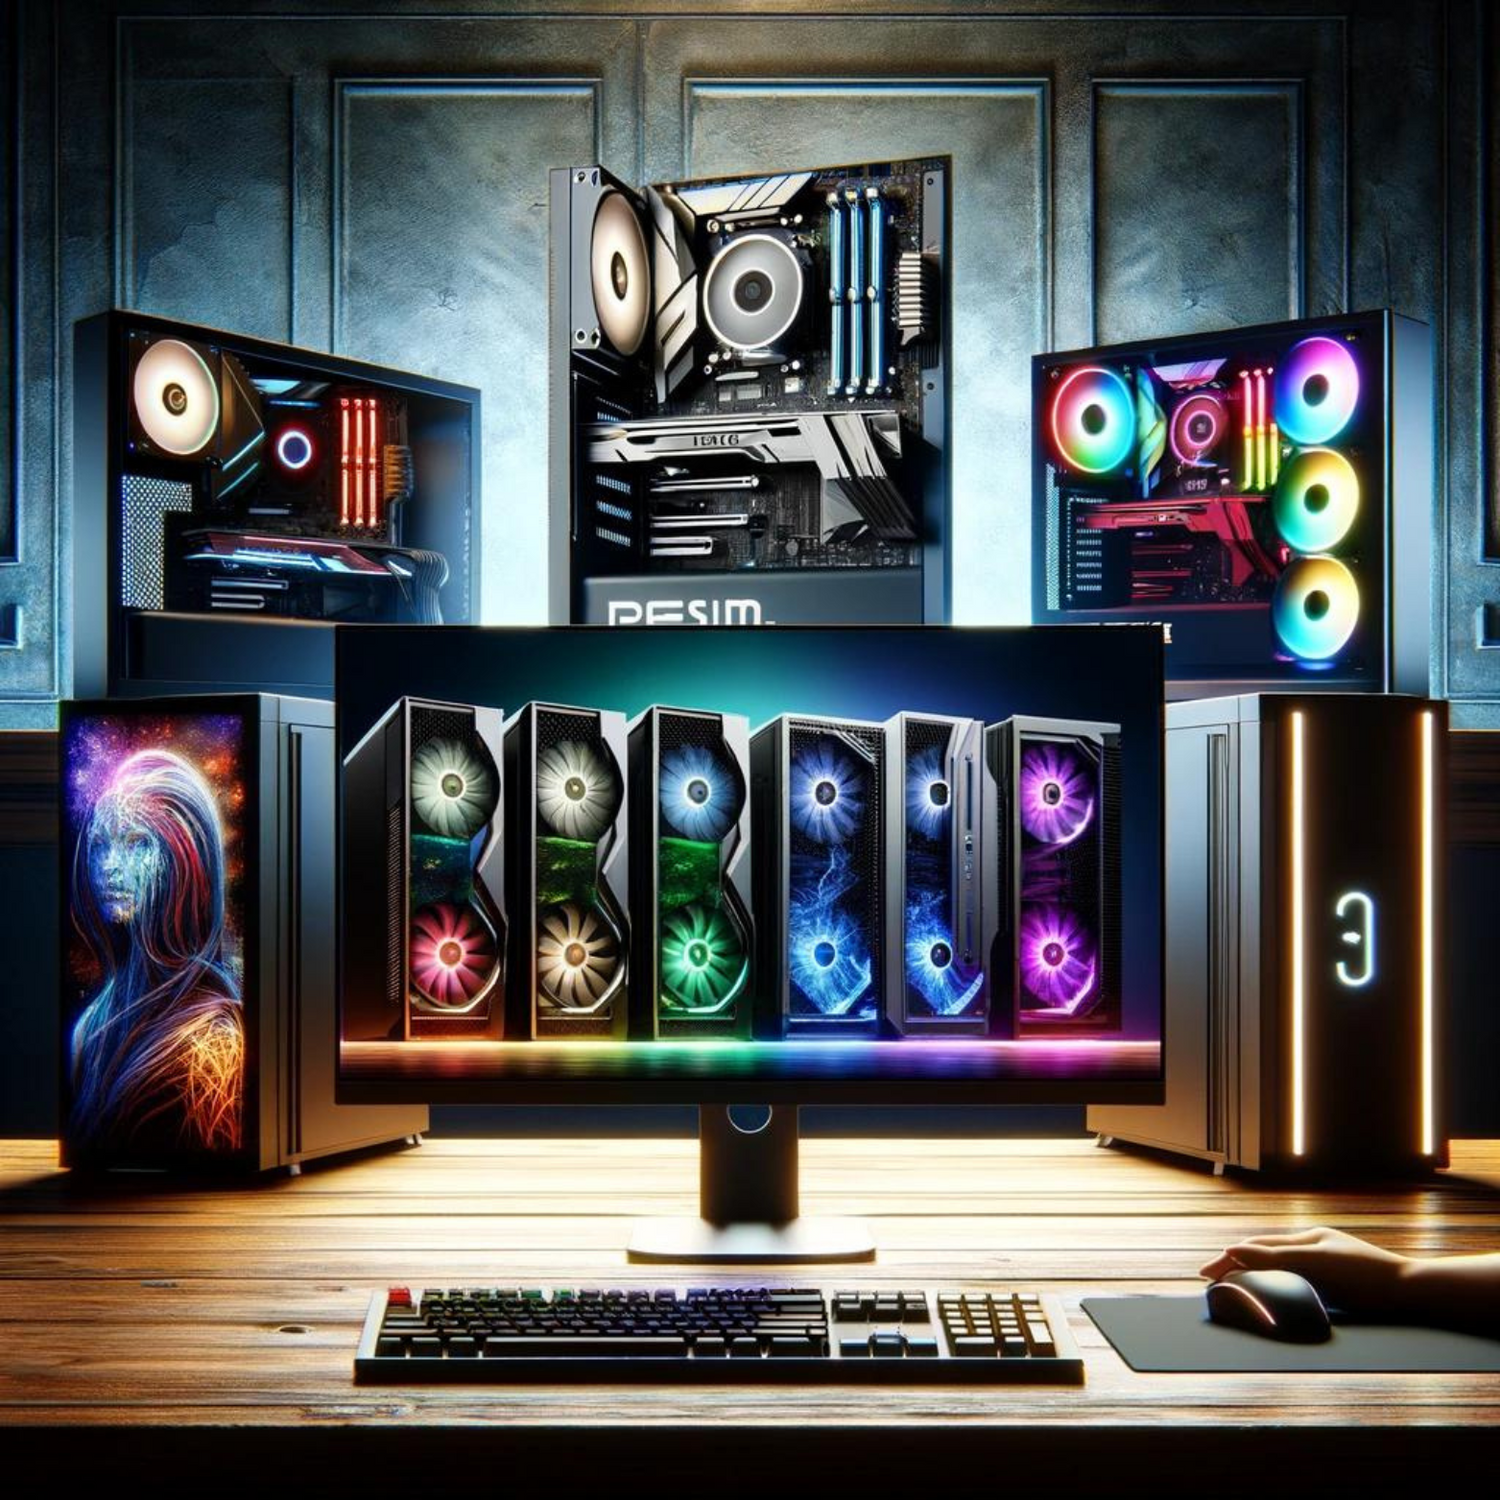 Discover Our Premier Desktop Collection